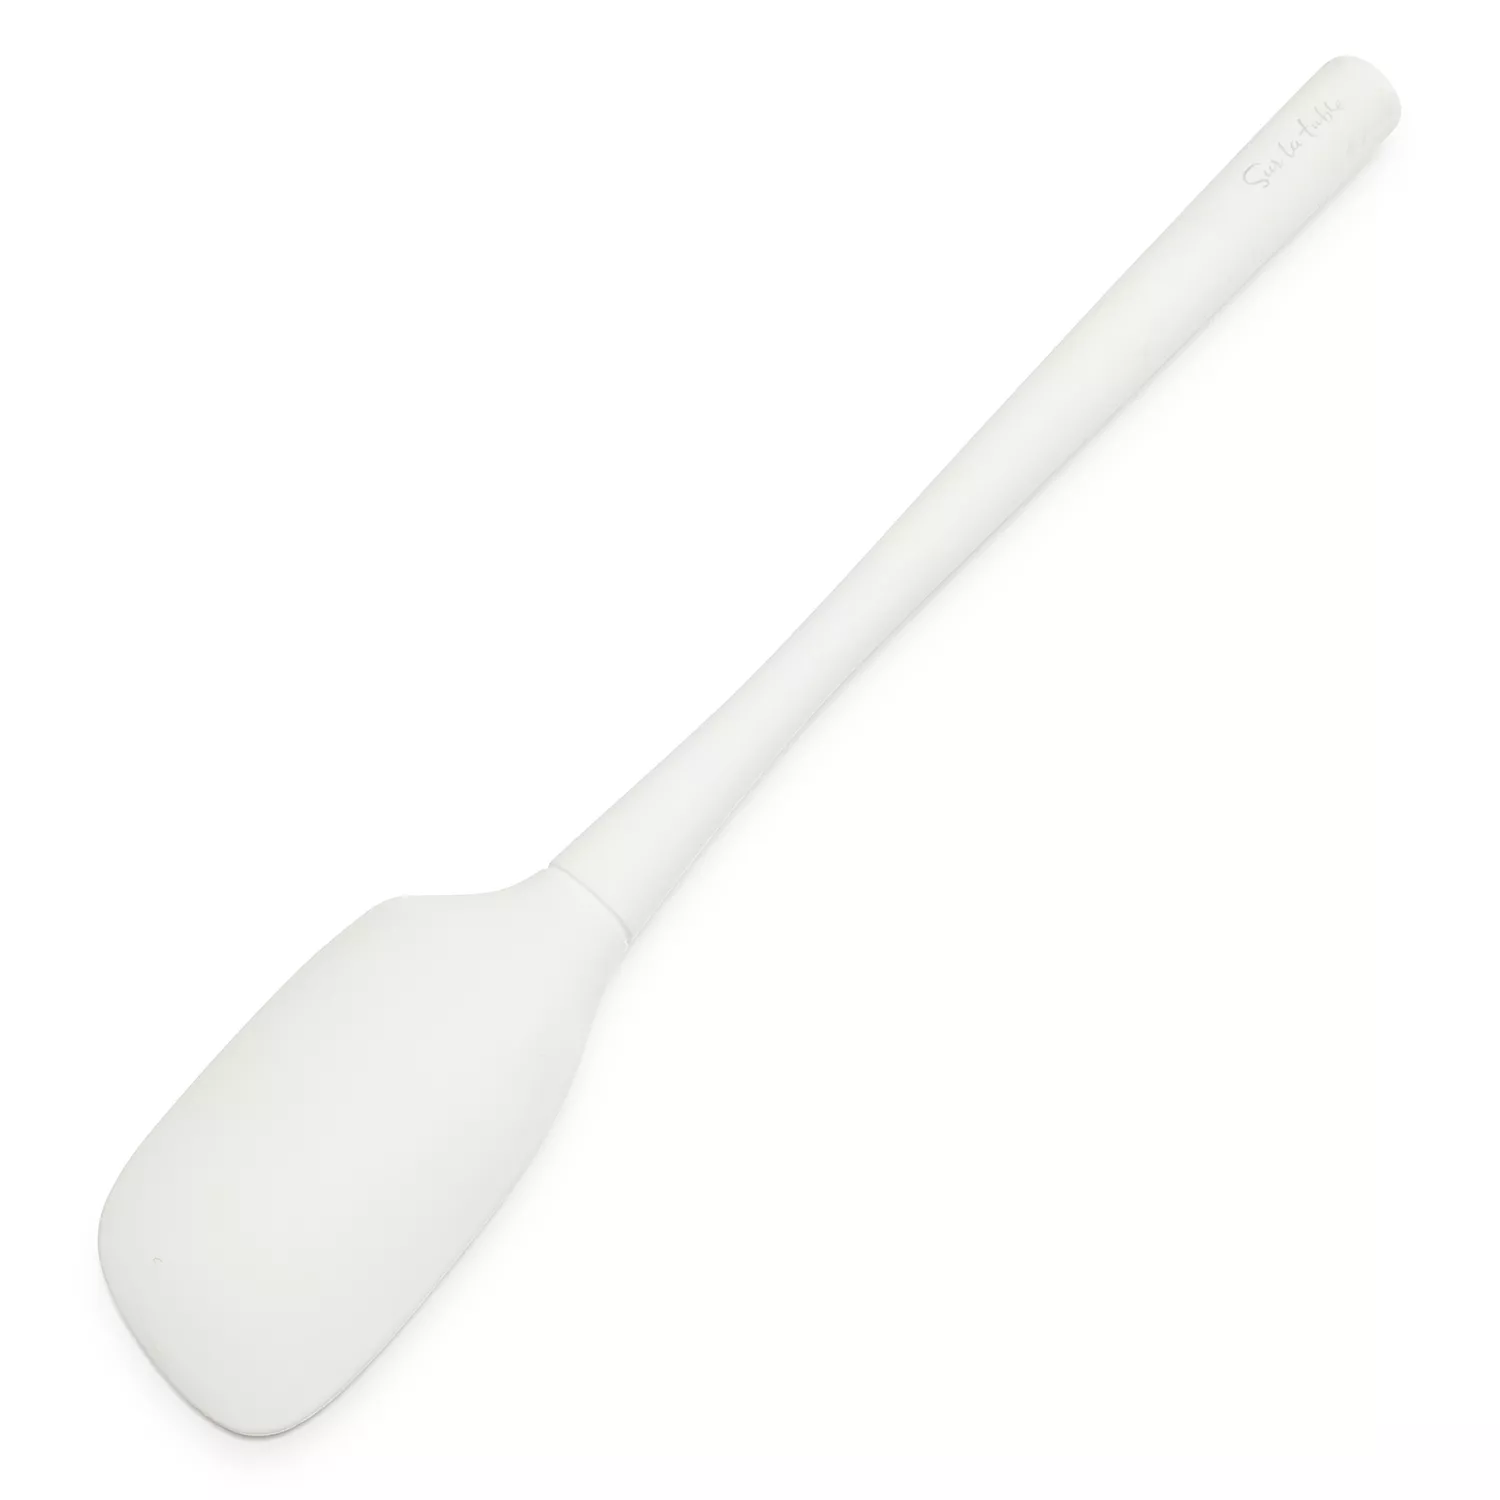 Sur La Table Flex-Core Silicone Spatula Spoon with Wood Handle, Red